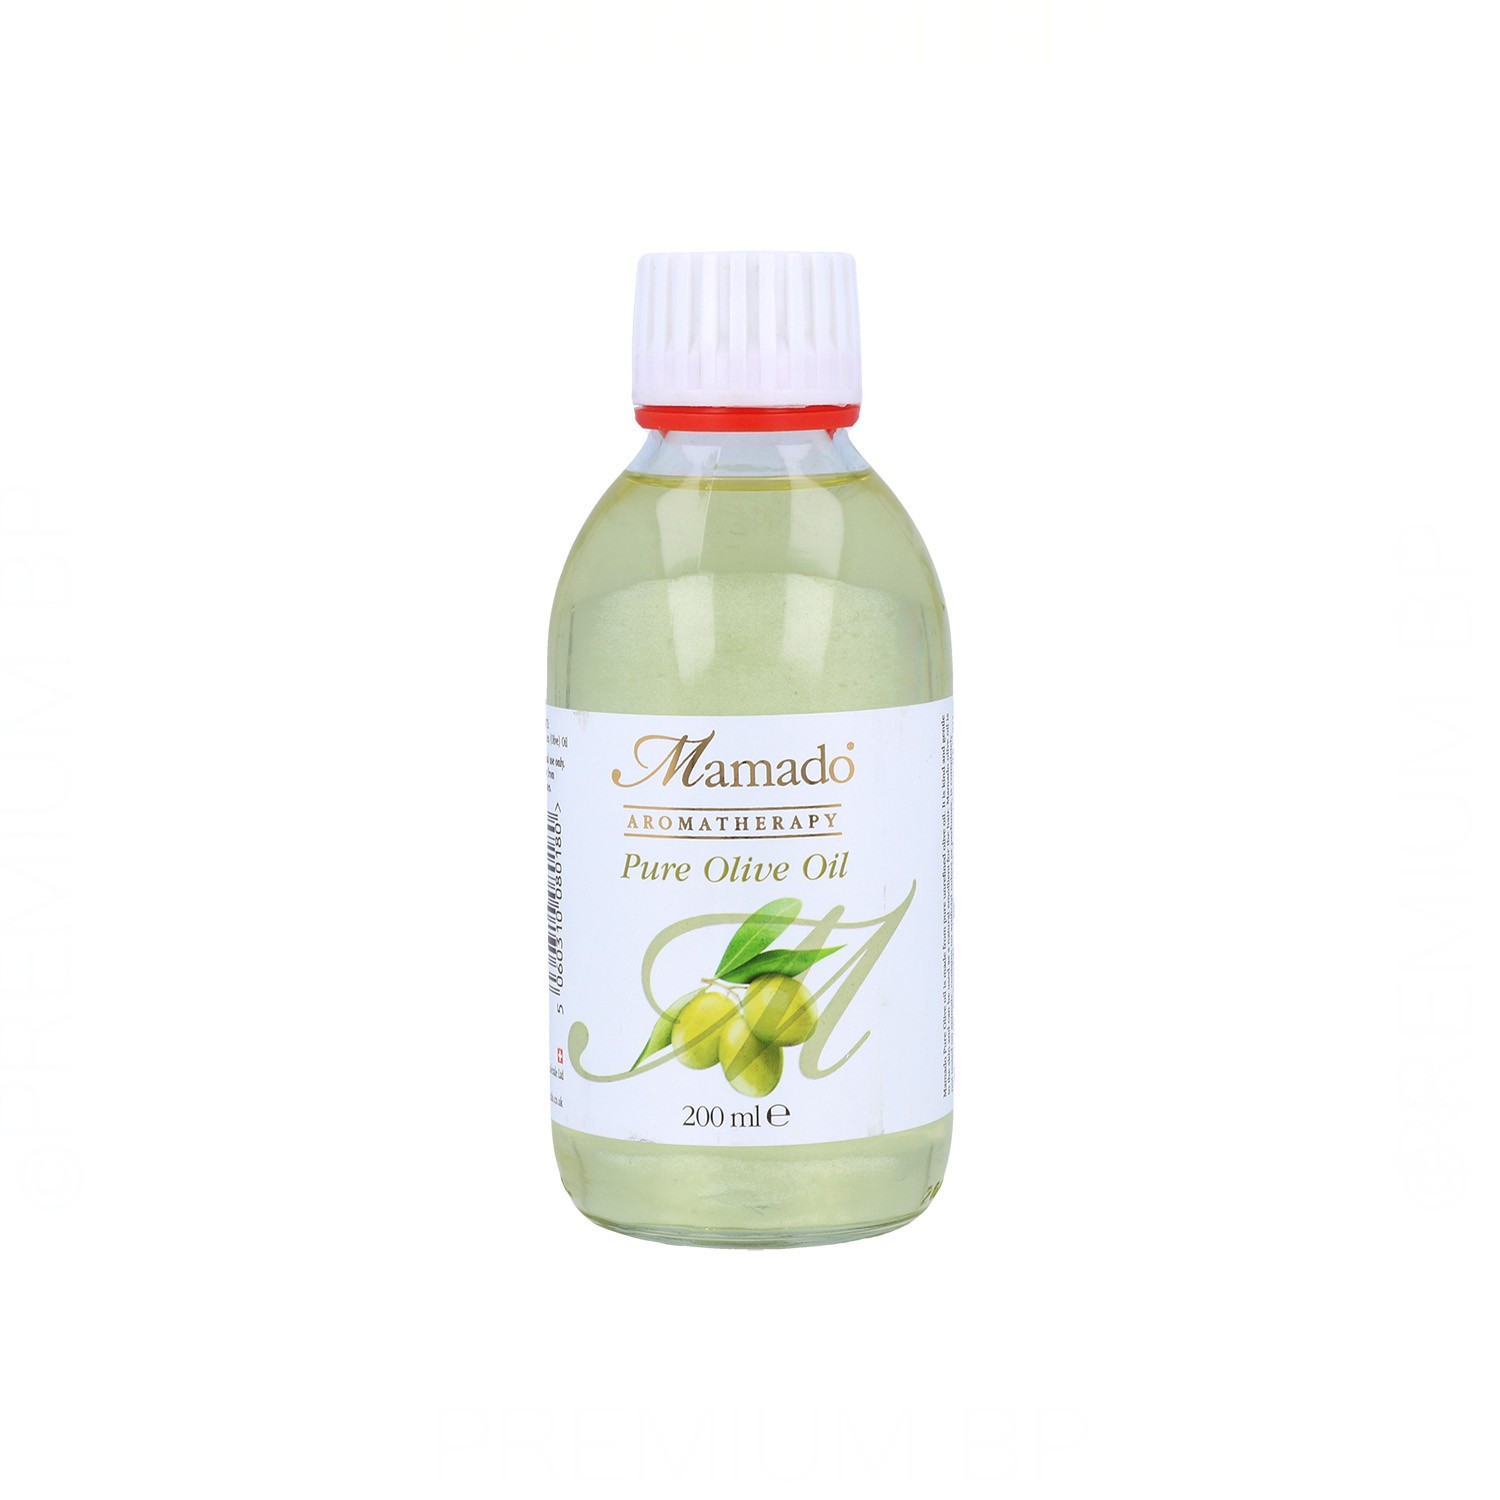 Mamado - Mamado pure aceite de oliva 200 ml, mamado aromaterapia 100% puro aceite de oliva de 200 ml está hecha de puro aceite de oliva sin refinar.